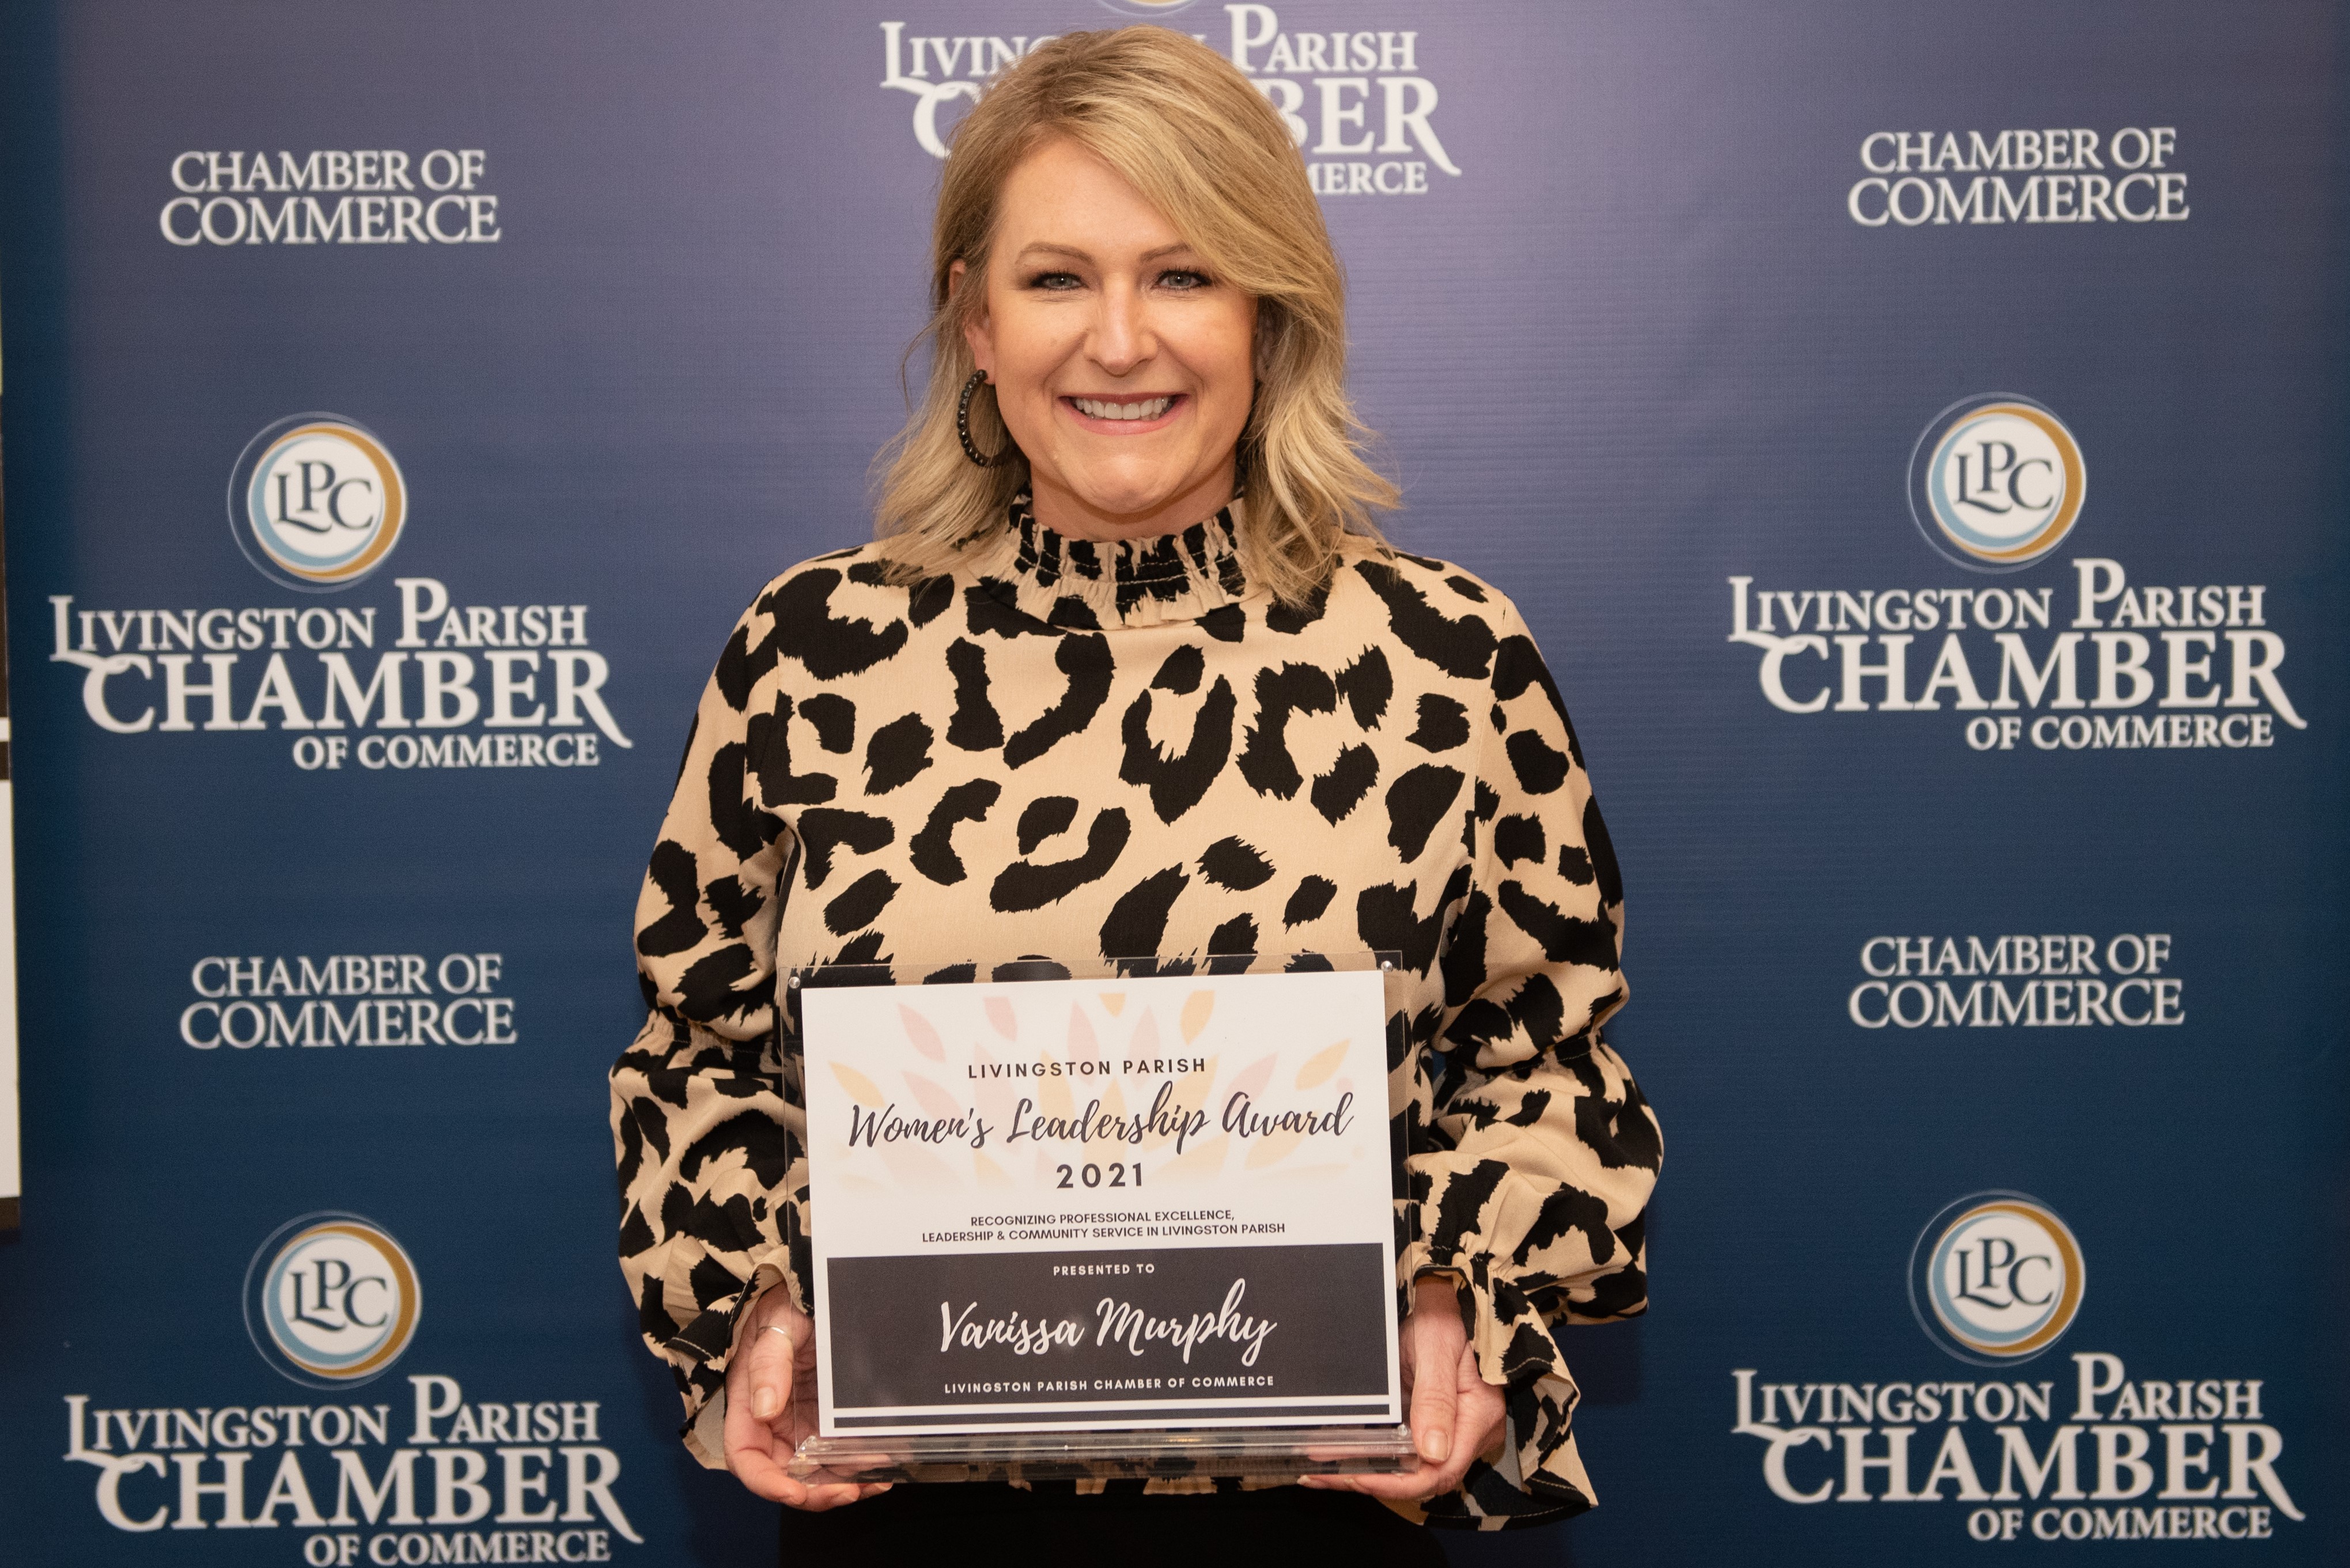 2021 Women's Leadership Award Winner, Vanissa Murphy